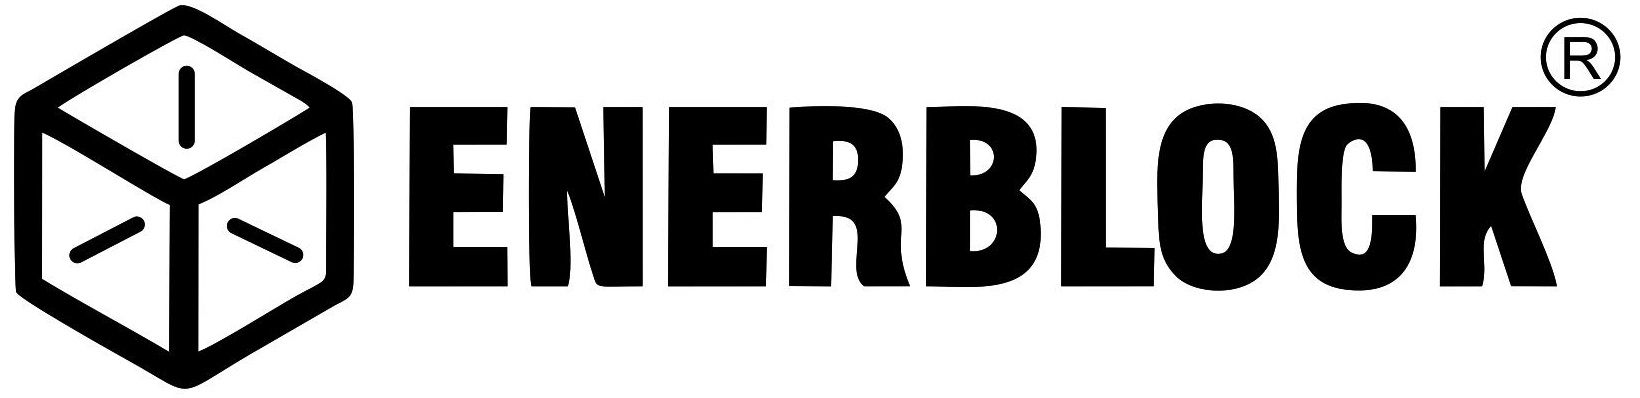 premar-enerblock-logo